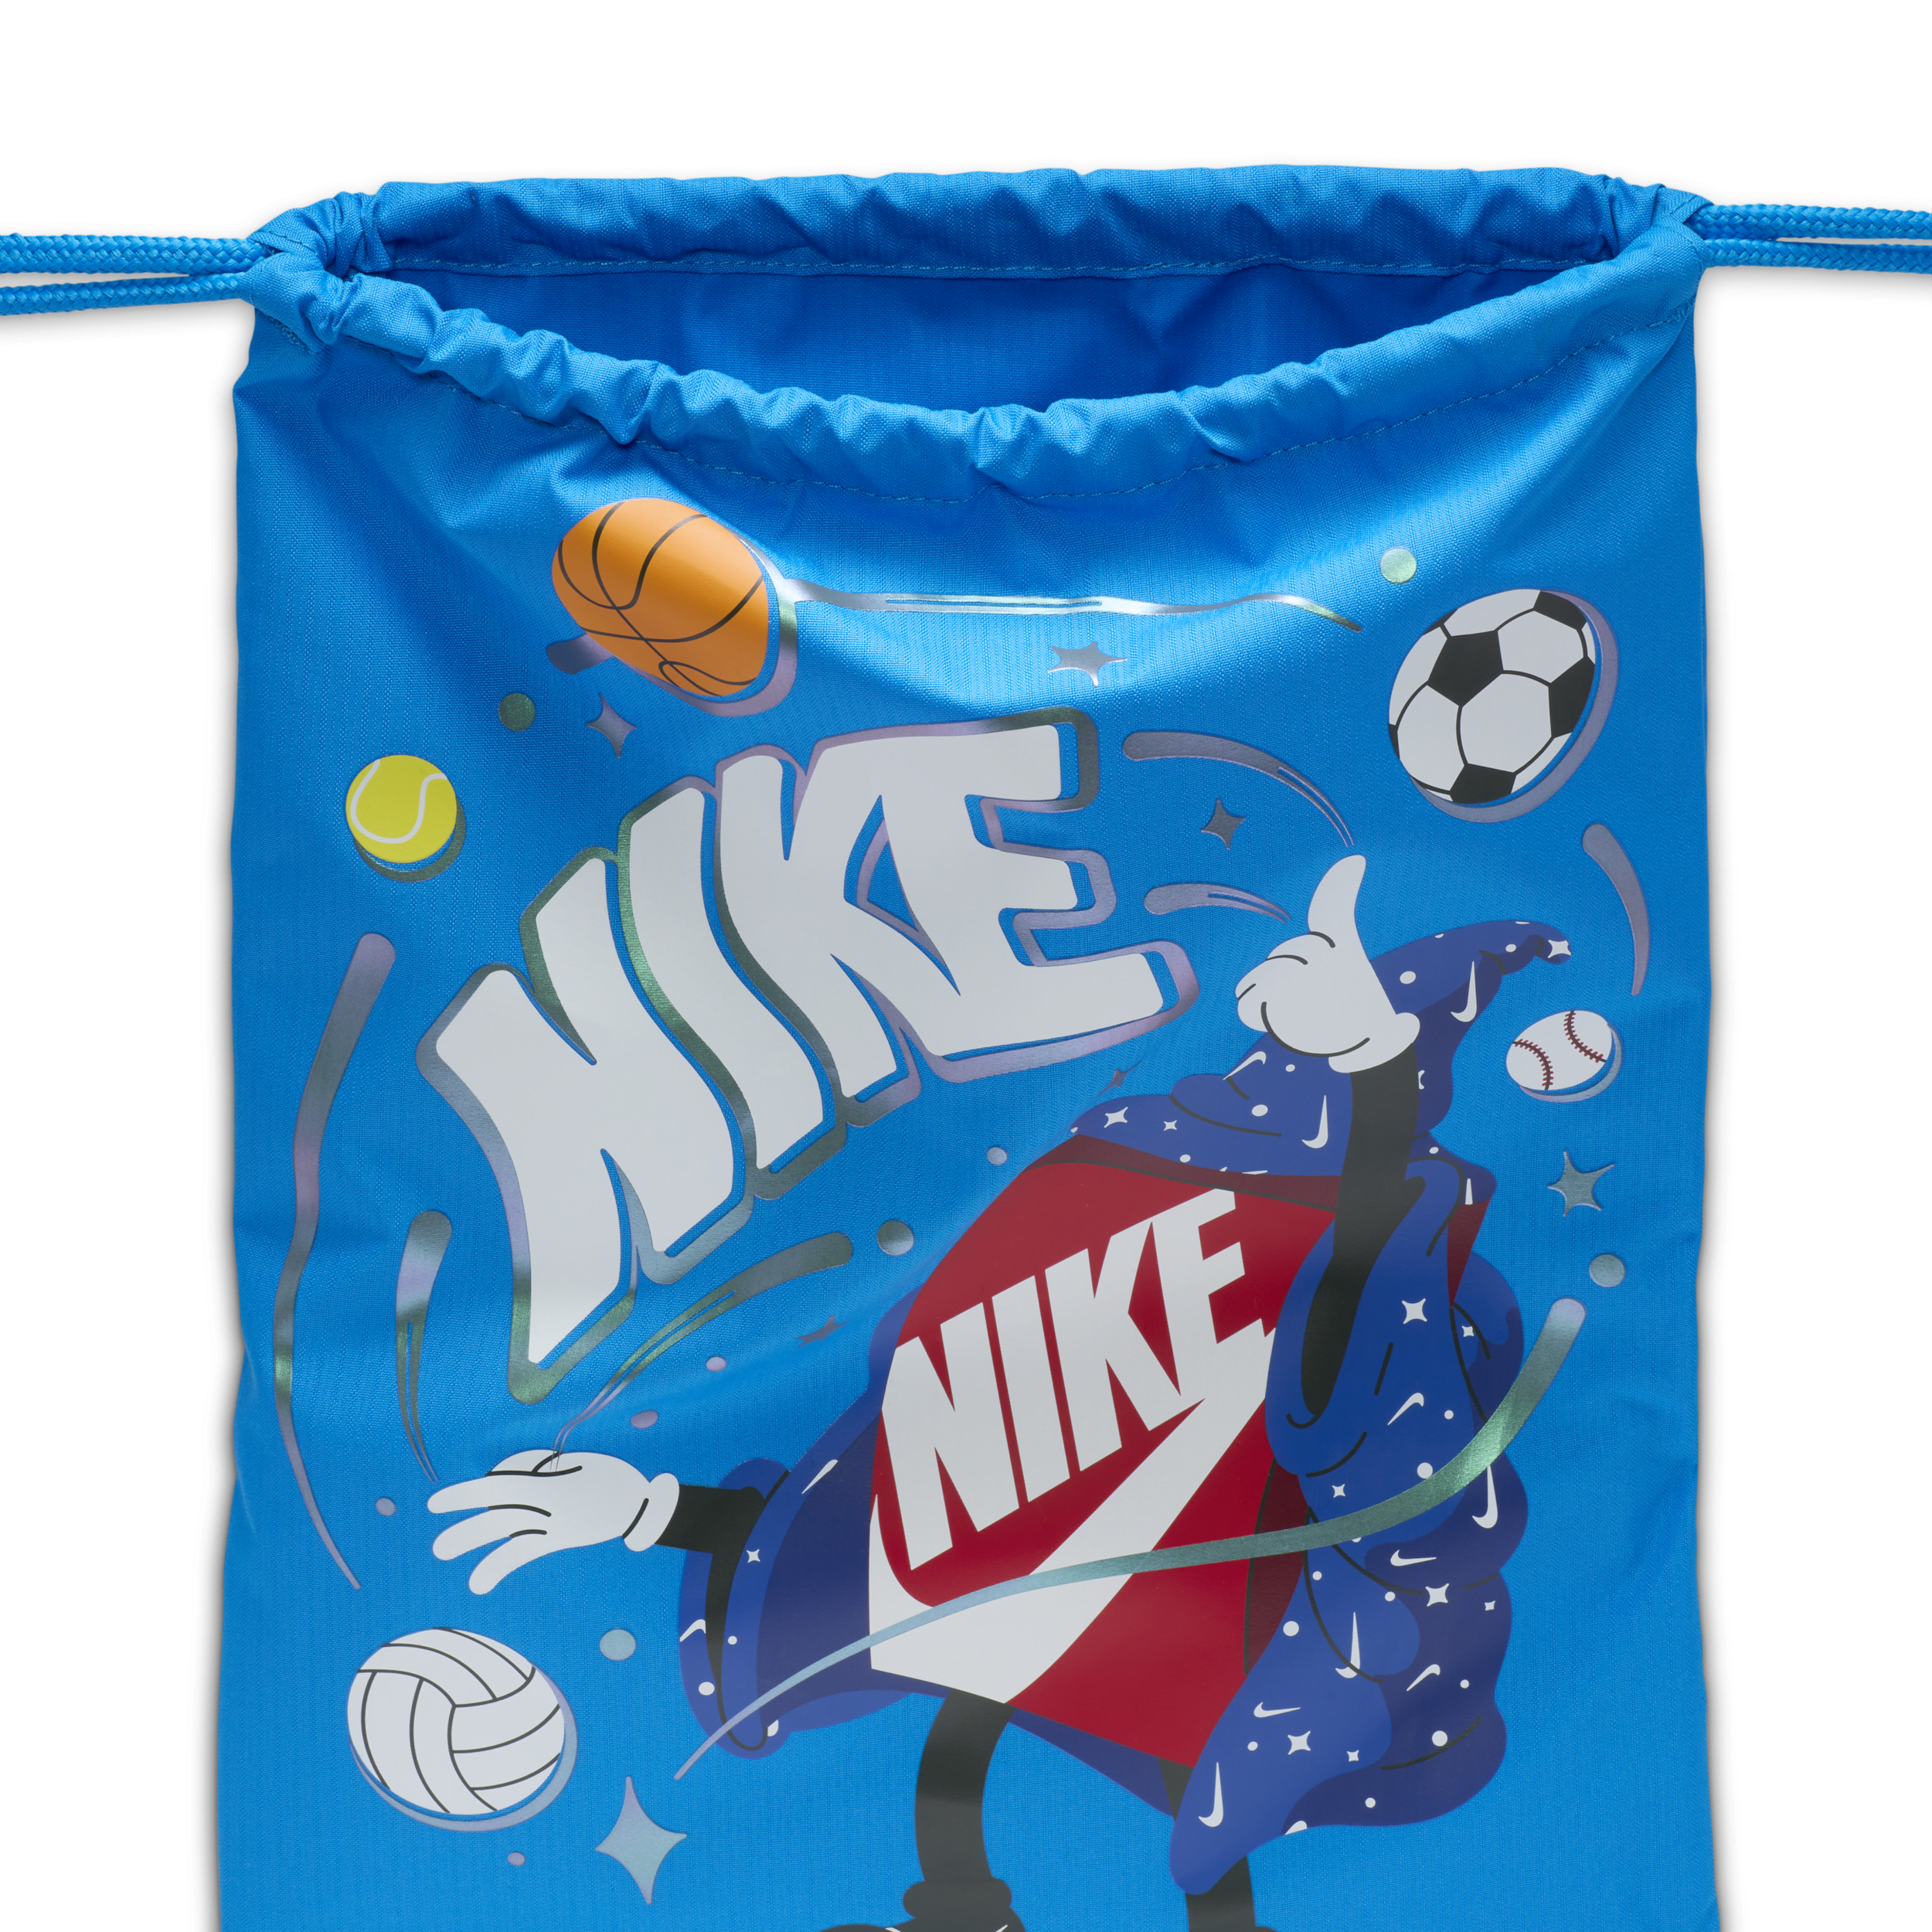 Nike Tas met trekkoord voor kids (12 liter) Blauw